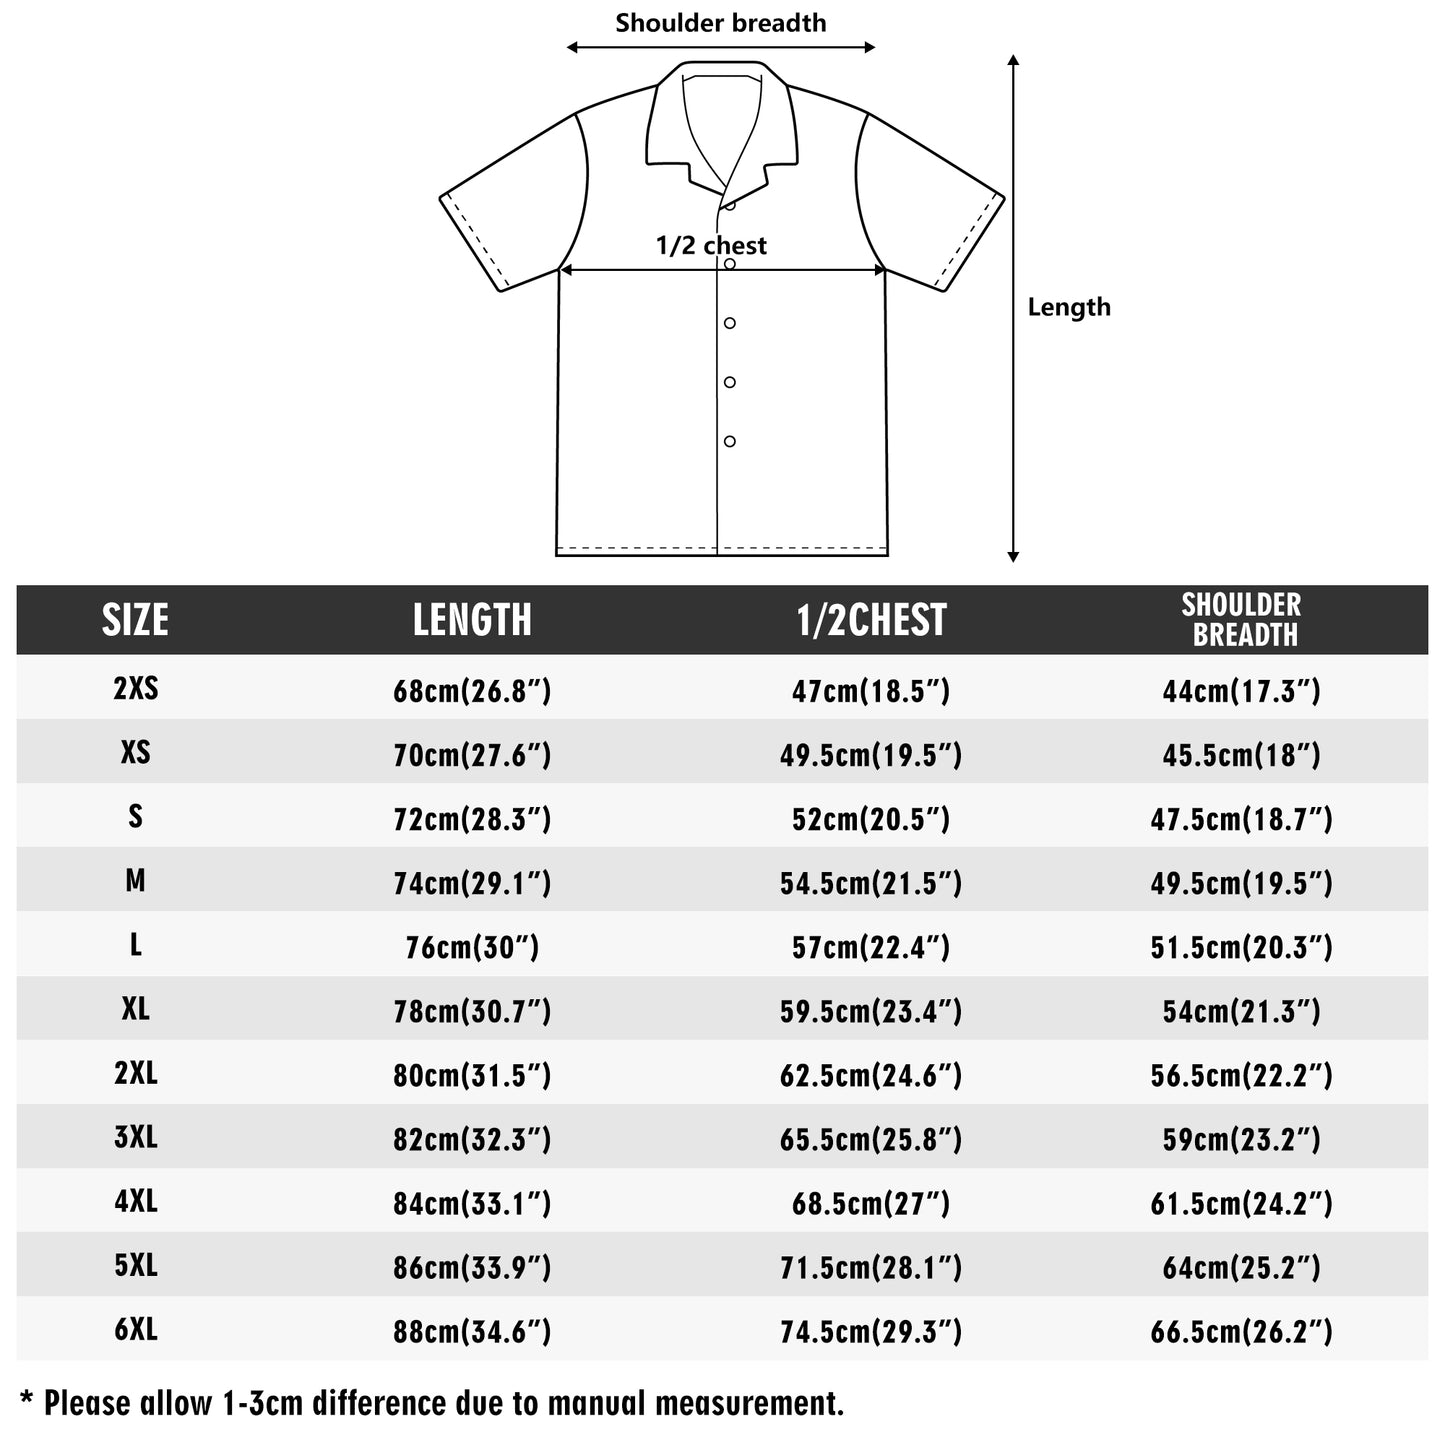 ※受注販売 SK OLDIES pattern shirt BLACKSTAR TATTOO JUN